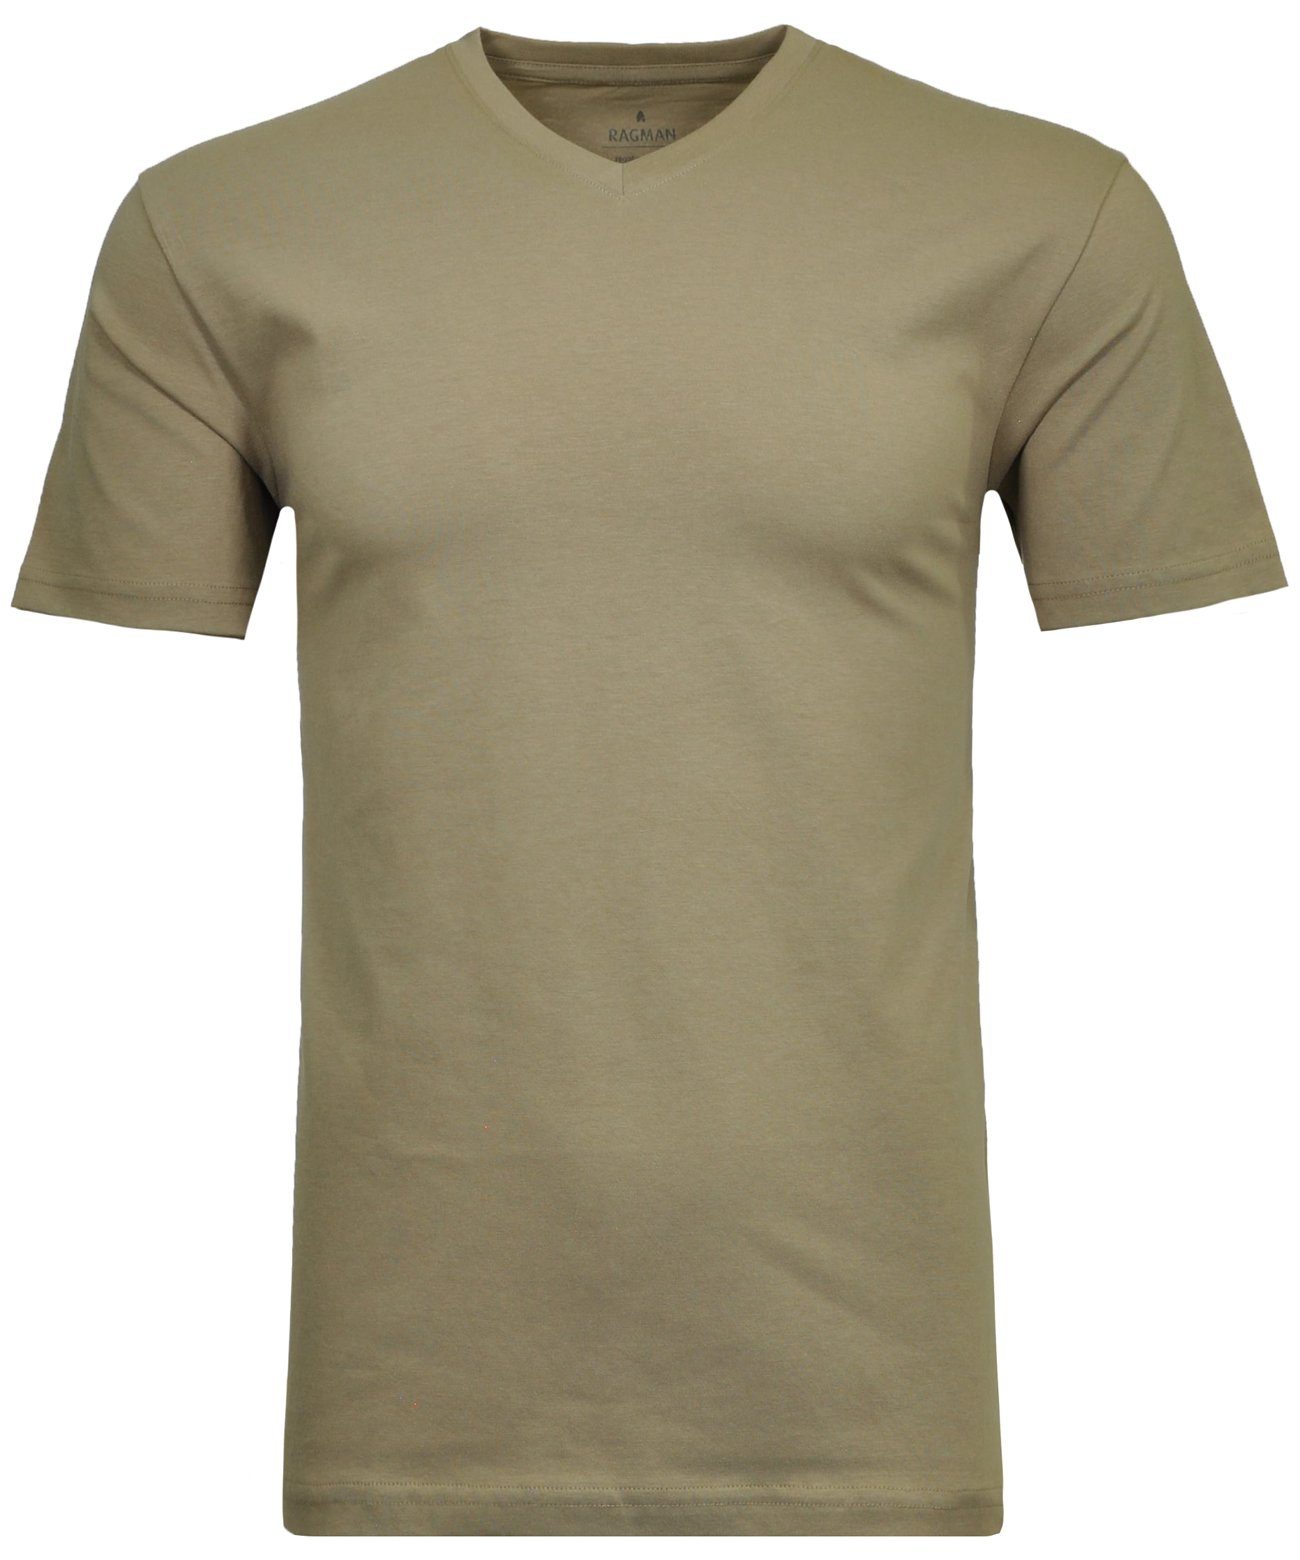 Kitt-881 RAGMAN T-Shirt